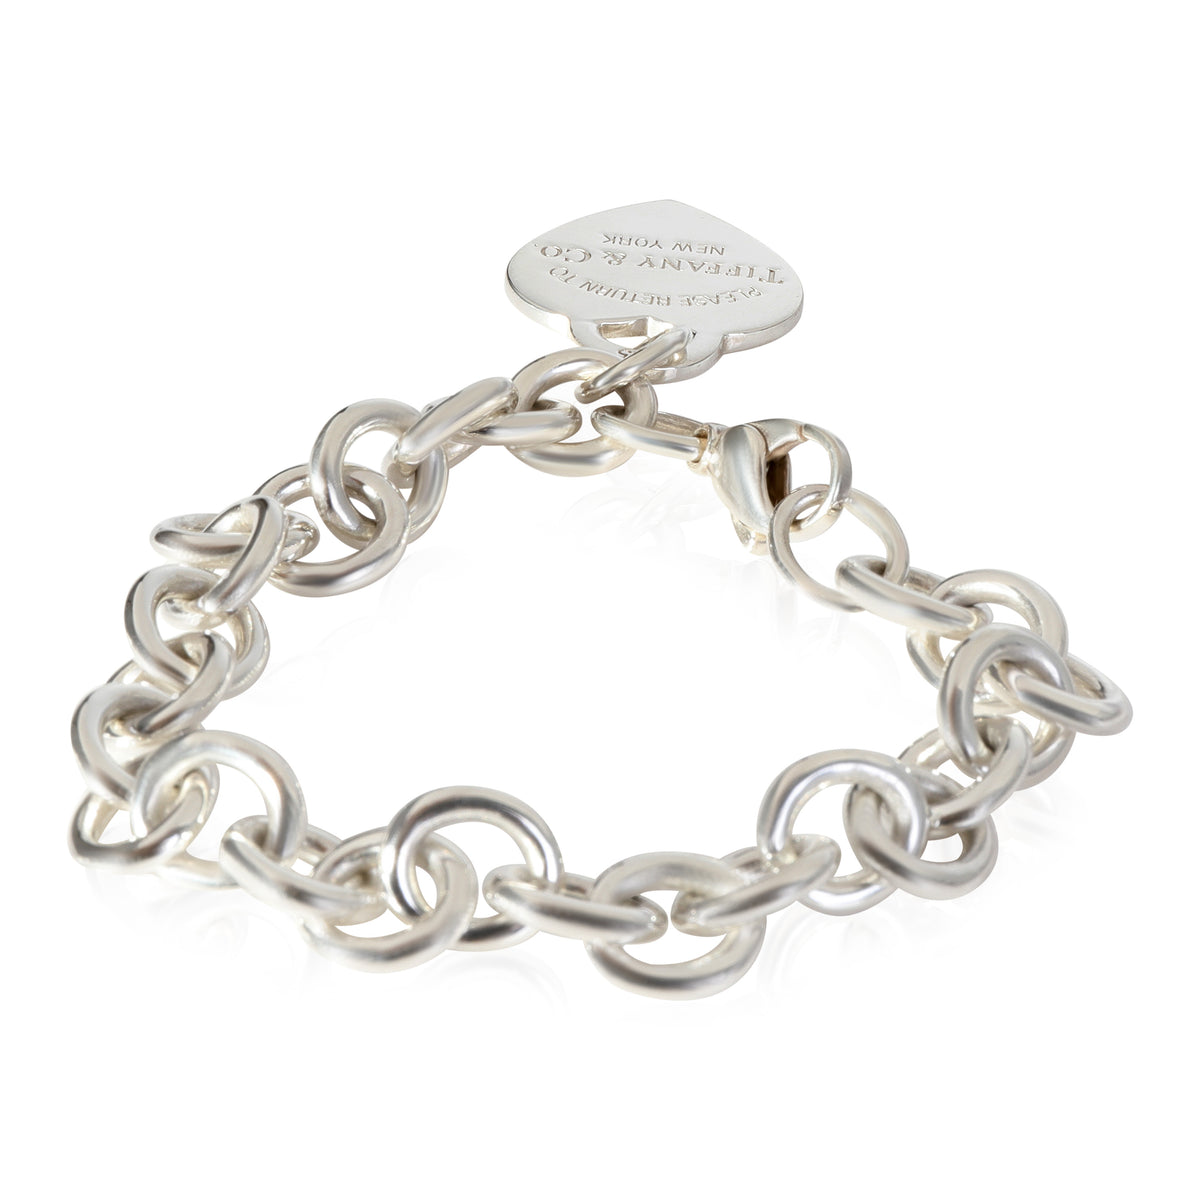 Tiffany & Co. Return To Tiffany Bracelet in Sterling Silver